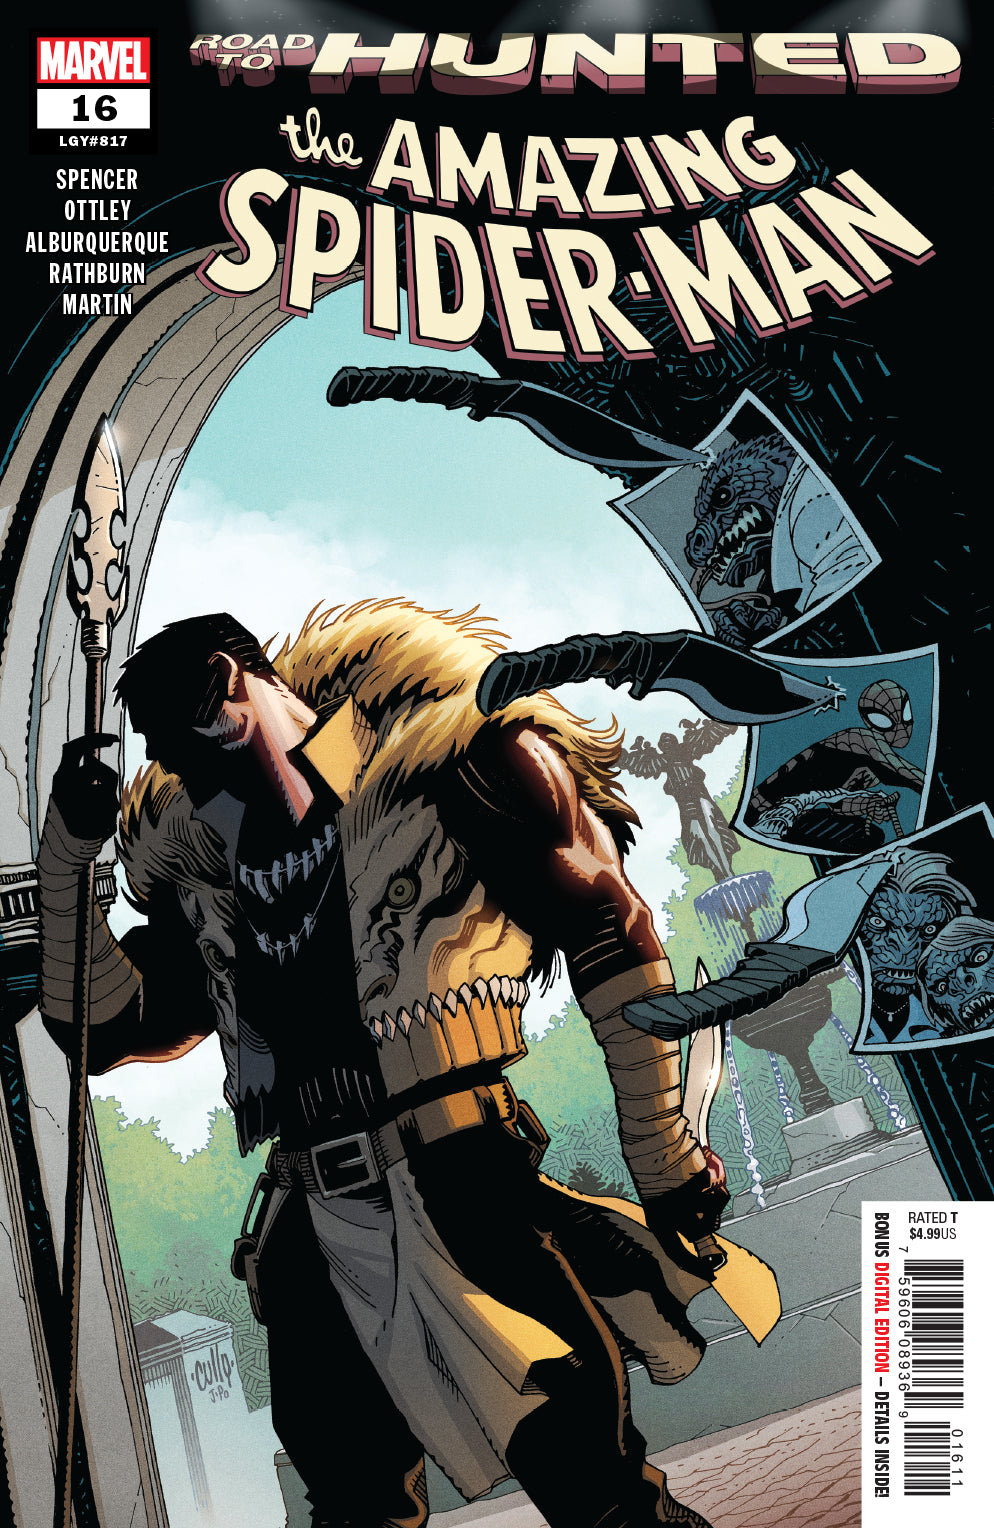 AMAZING SPIDER-MAN #16 COVER